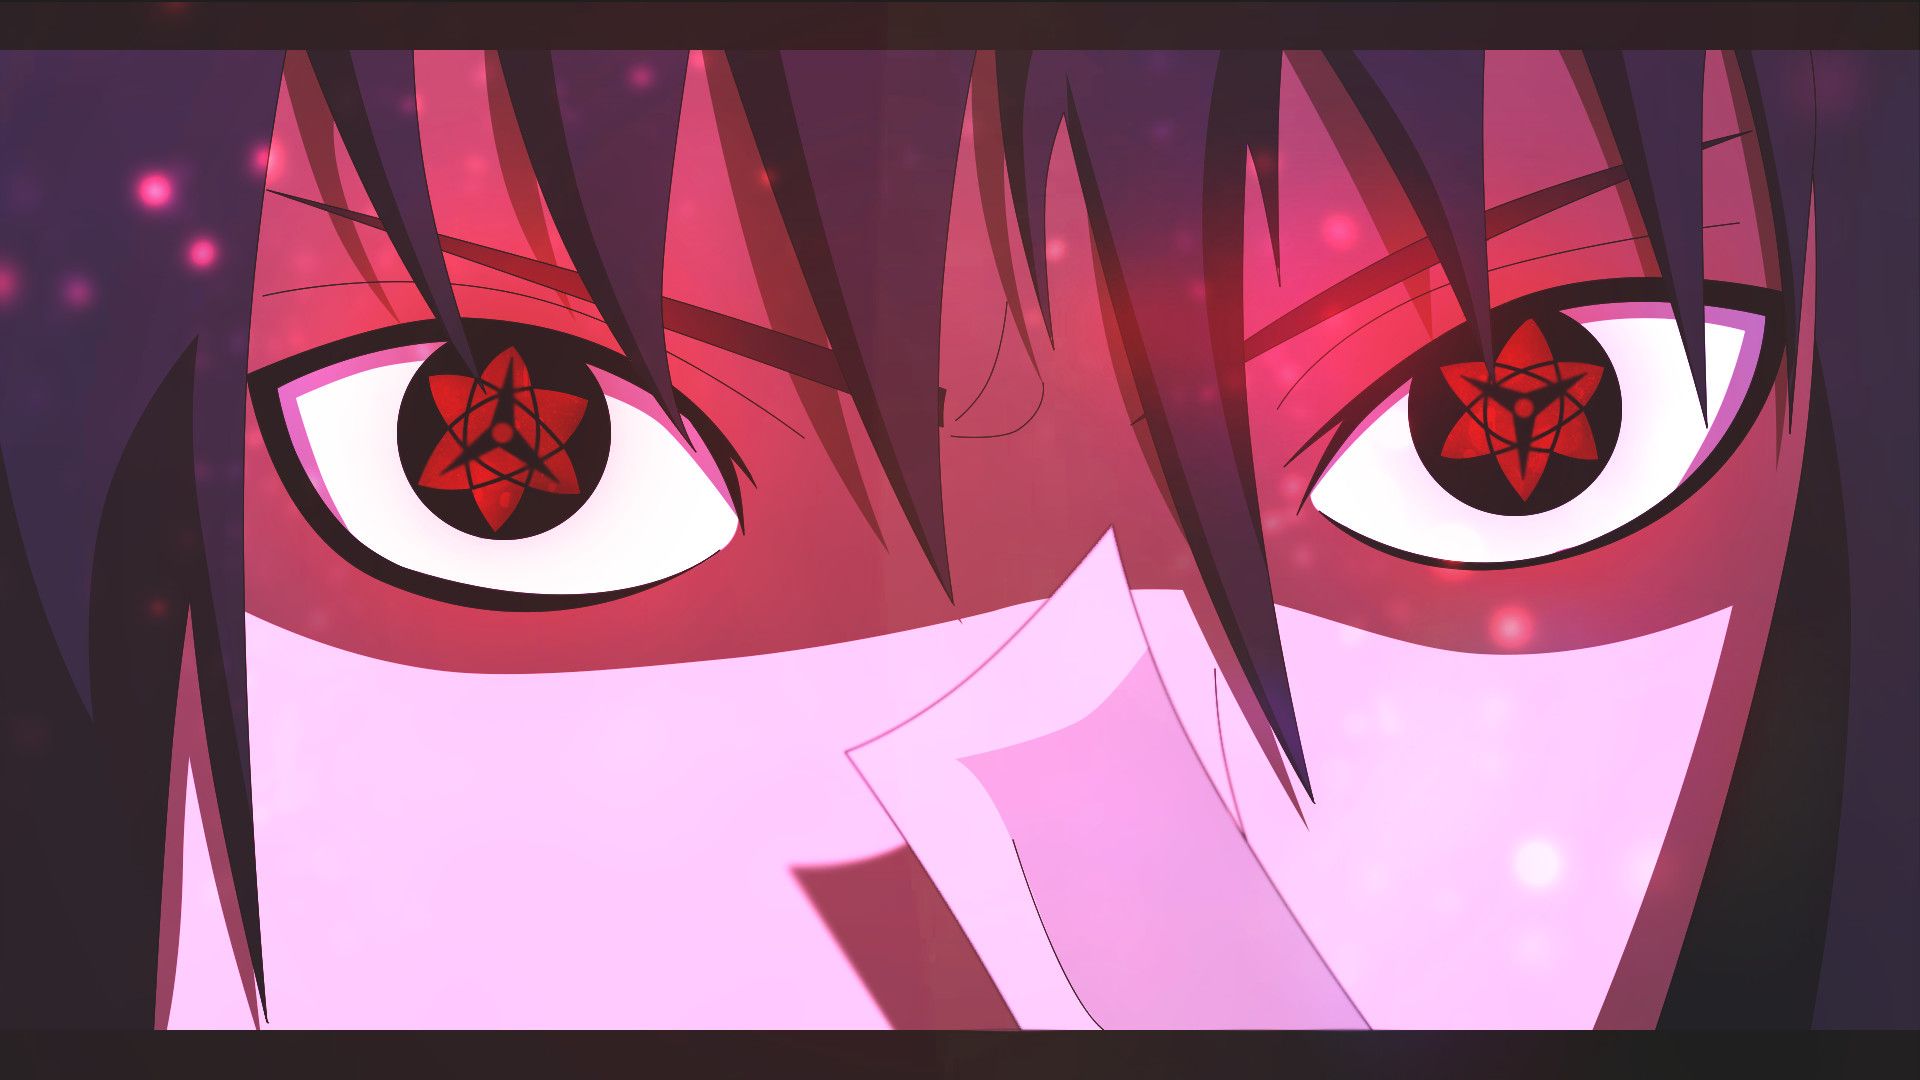 Wallpaper, Uchiha Sasuke, naruto anime, shuriken, red eyes, illustration, artwork 1920x1080